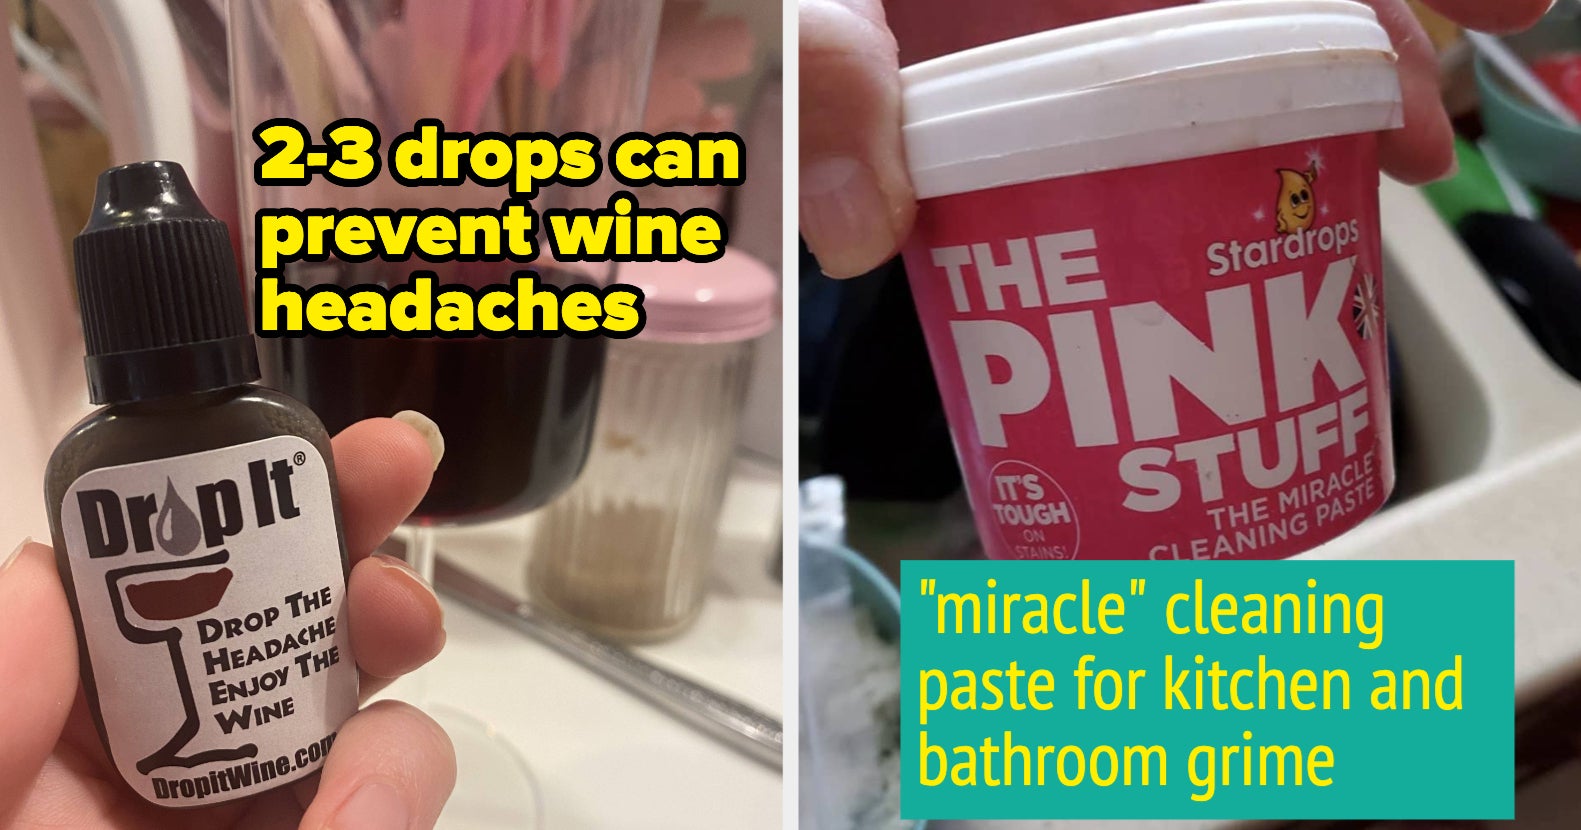 The Pink Stuff, Miracle All-Purpose Liquid Floor Cleaner, 33.8 fl. oz.